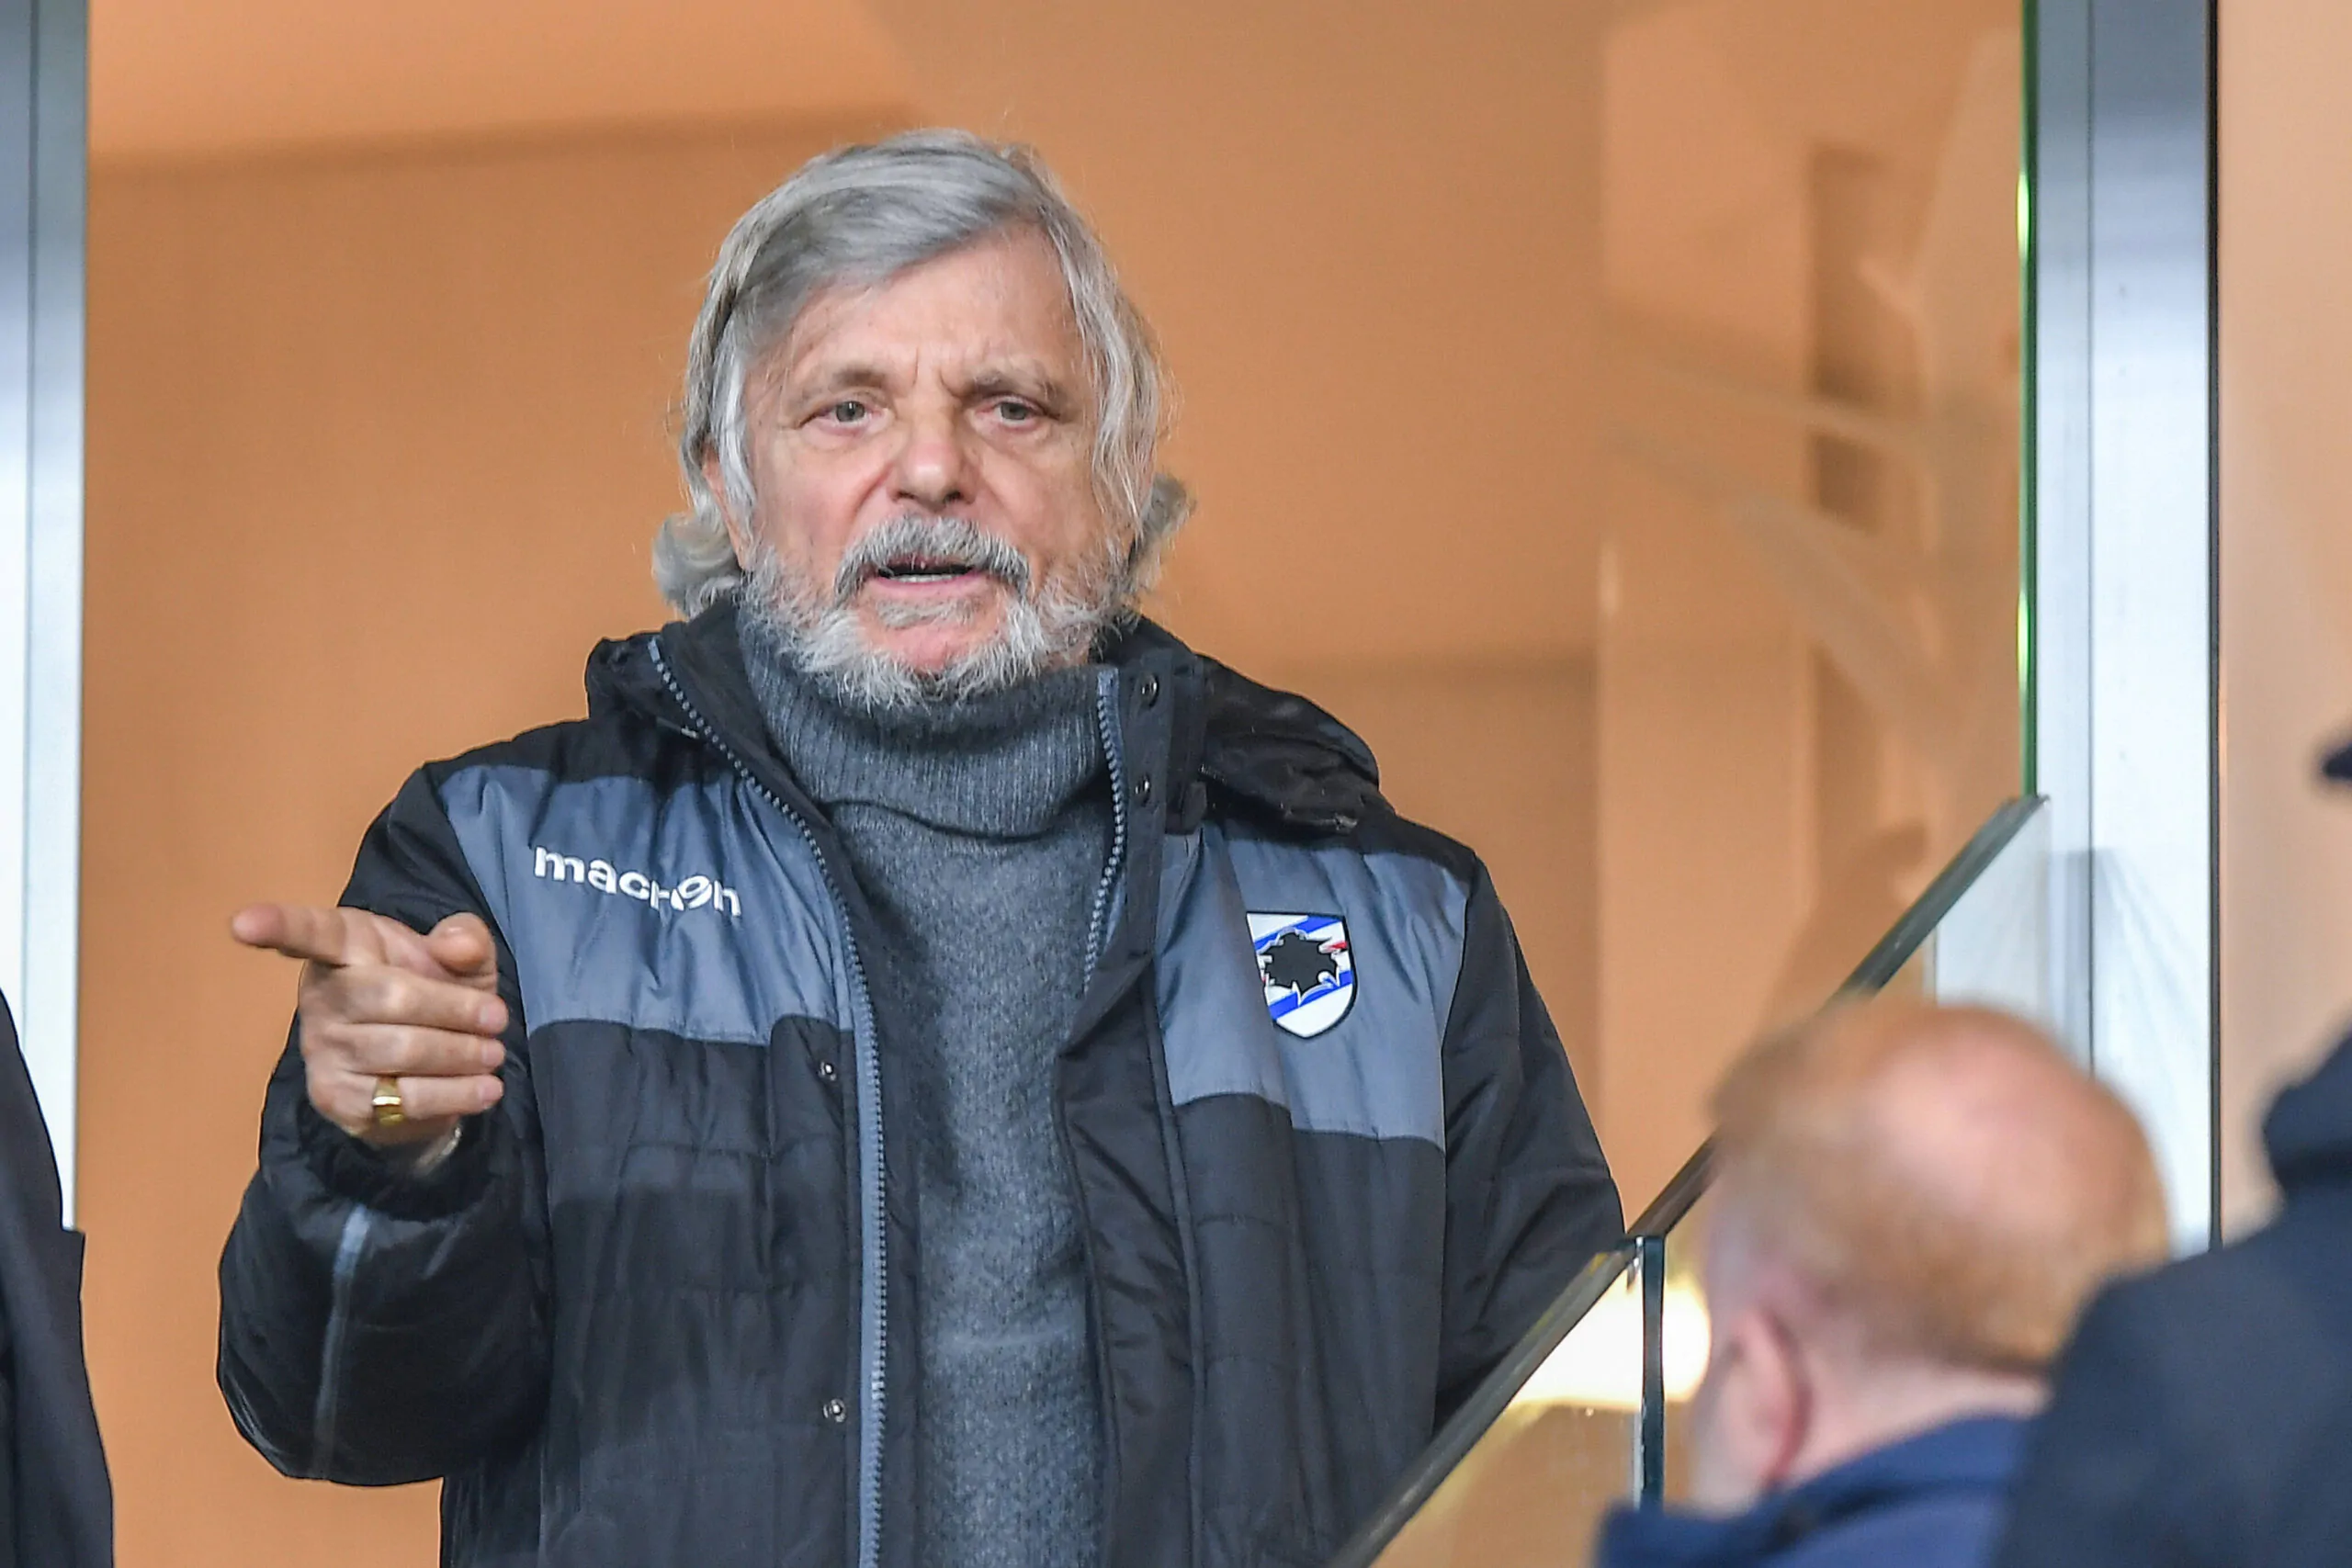 Sampdoria shock: testa di maiale davanti alla sede, pacco per Ferrero